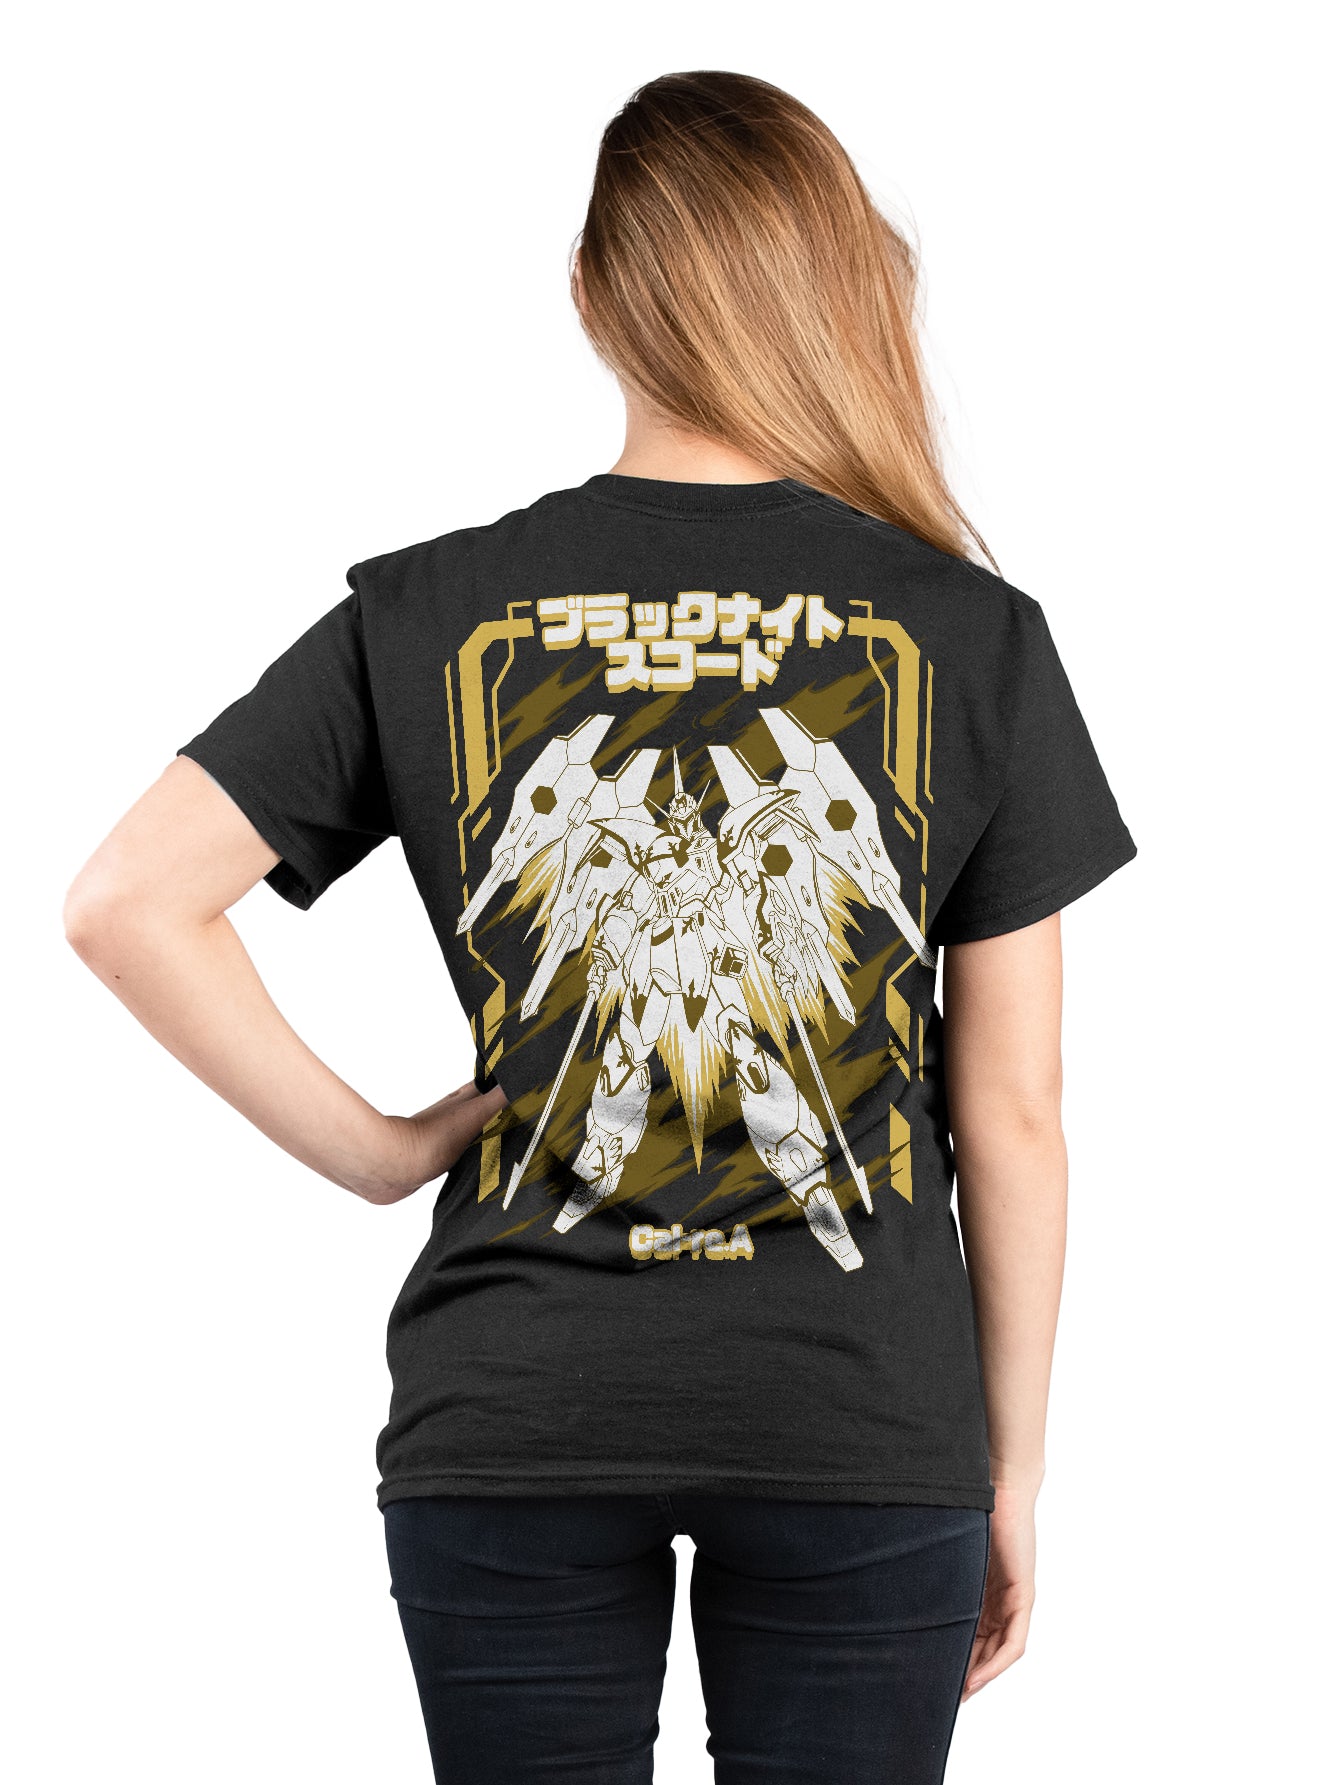 MSG Black Knight V2 Unisex T-Shirt